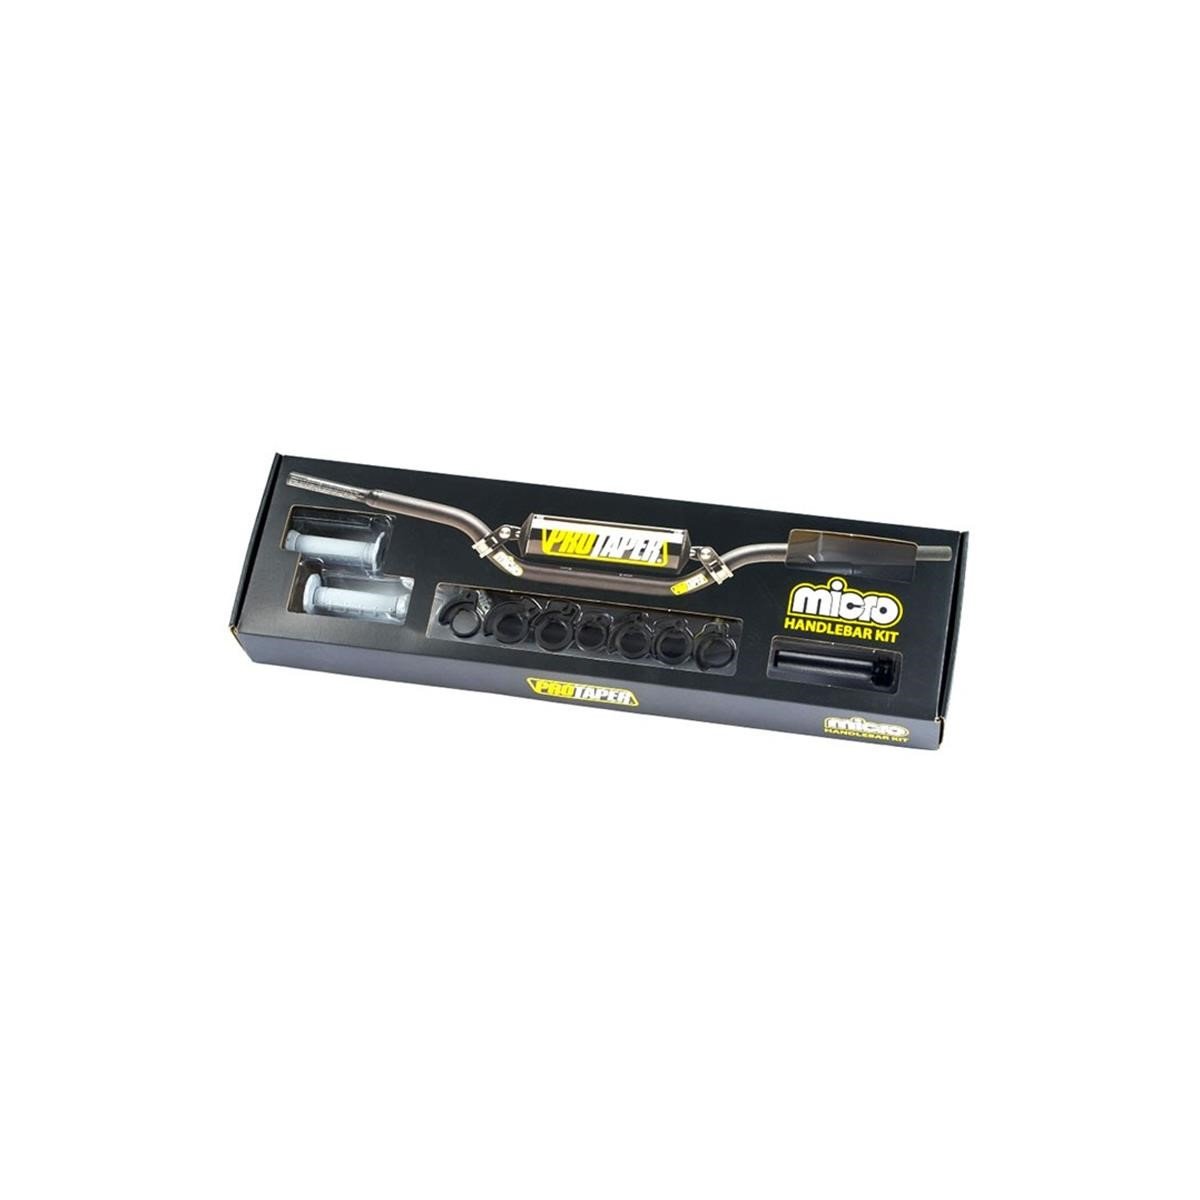 ProTaper Handlebar Kit Micro KTM 50 Micro, black, 22mm